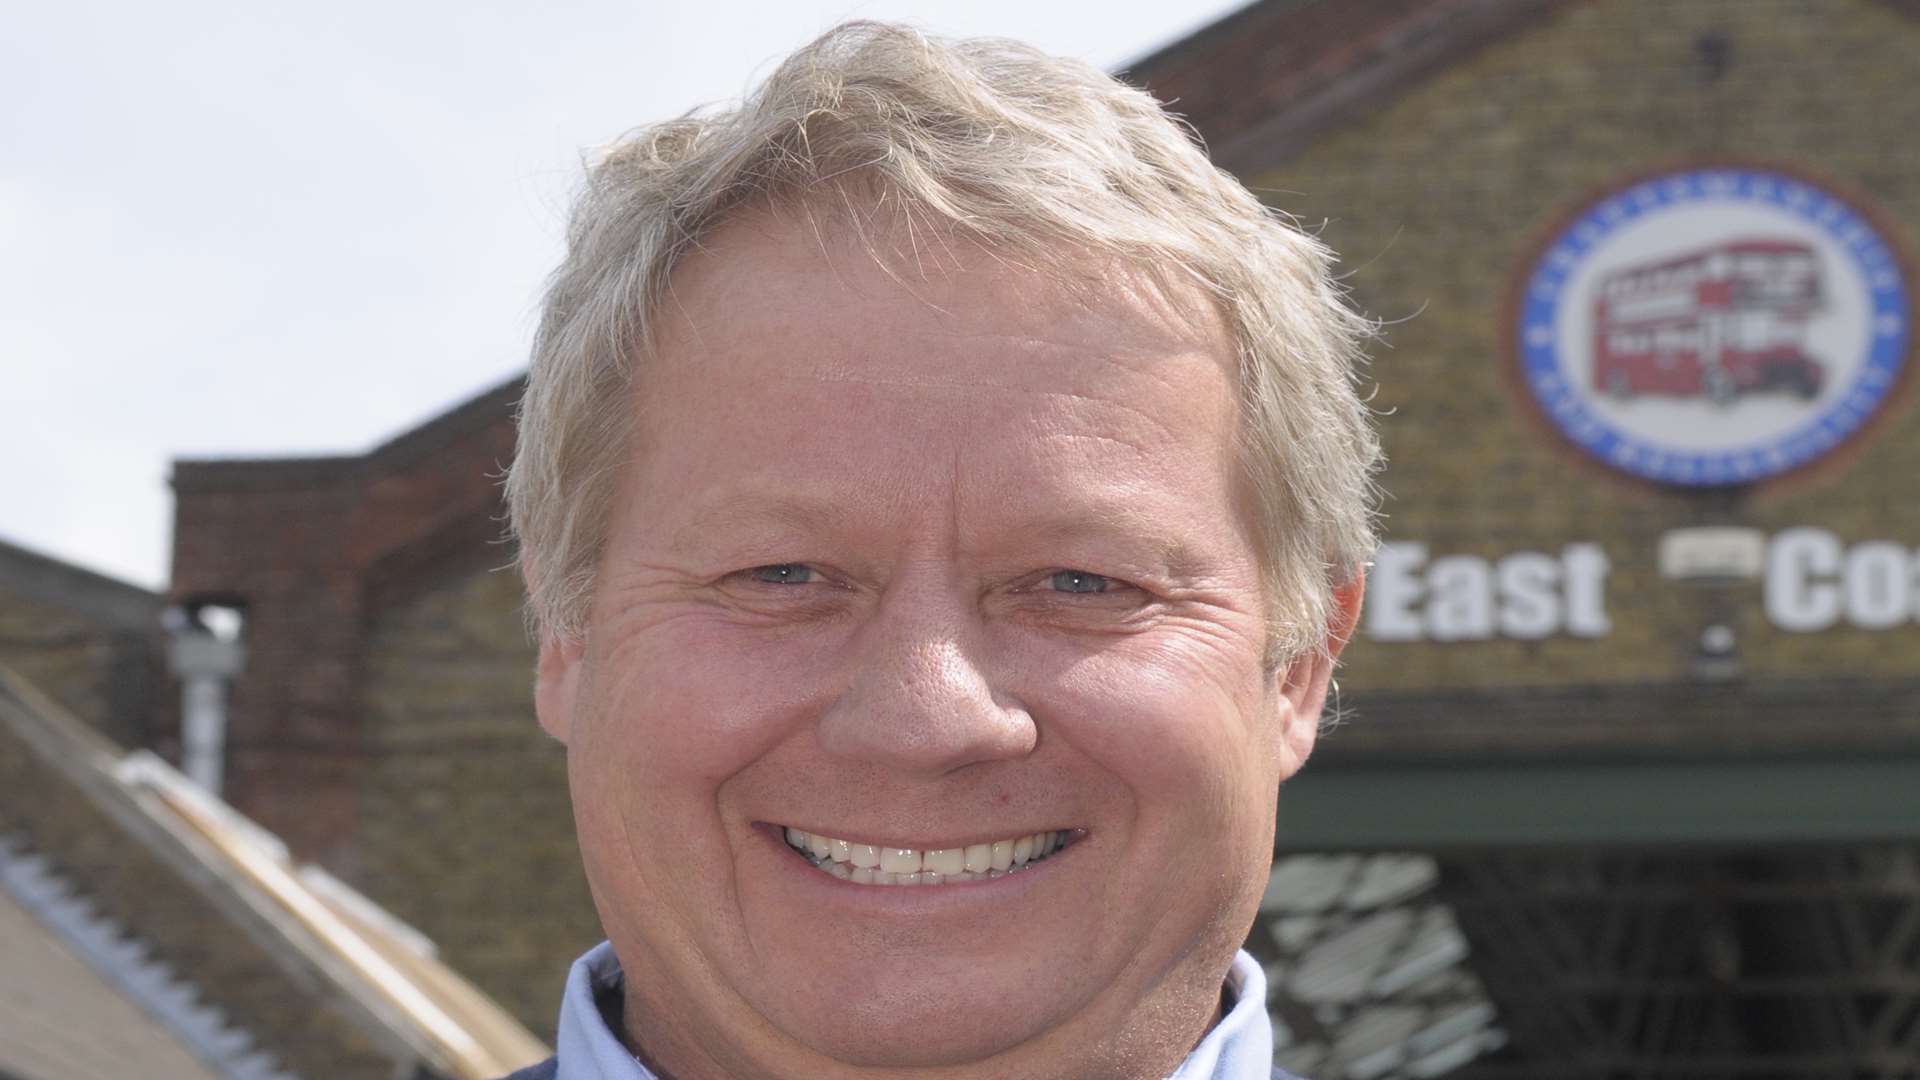 Chairman of the Faversham Business Partnership Chris Bichard